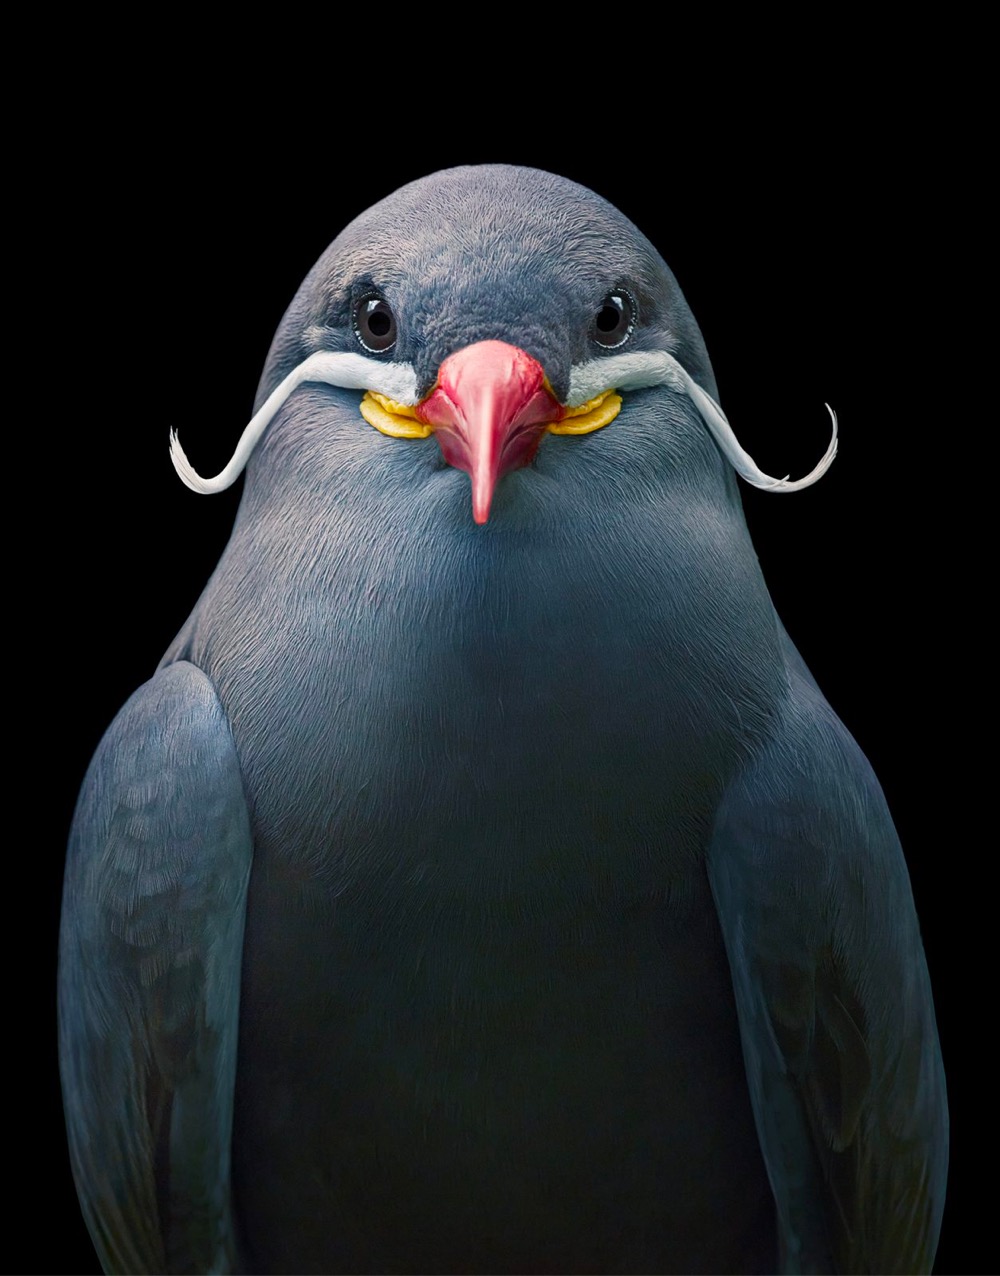 closeup of a bird with a mustache